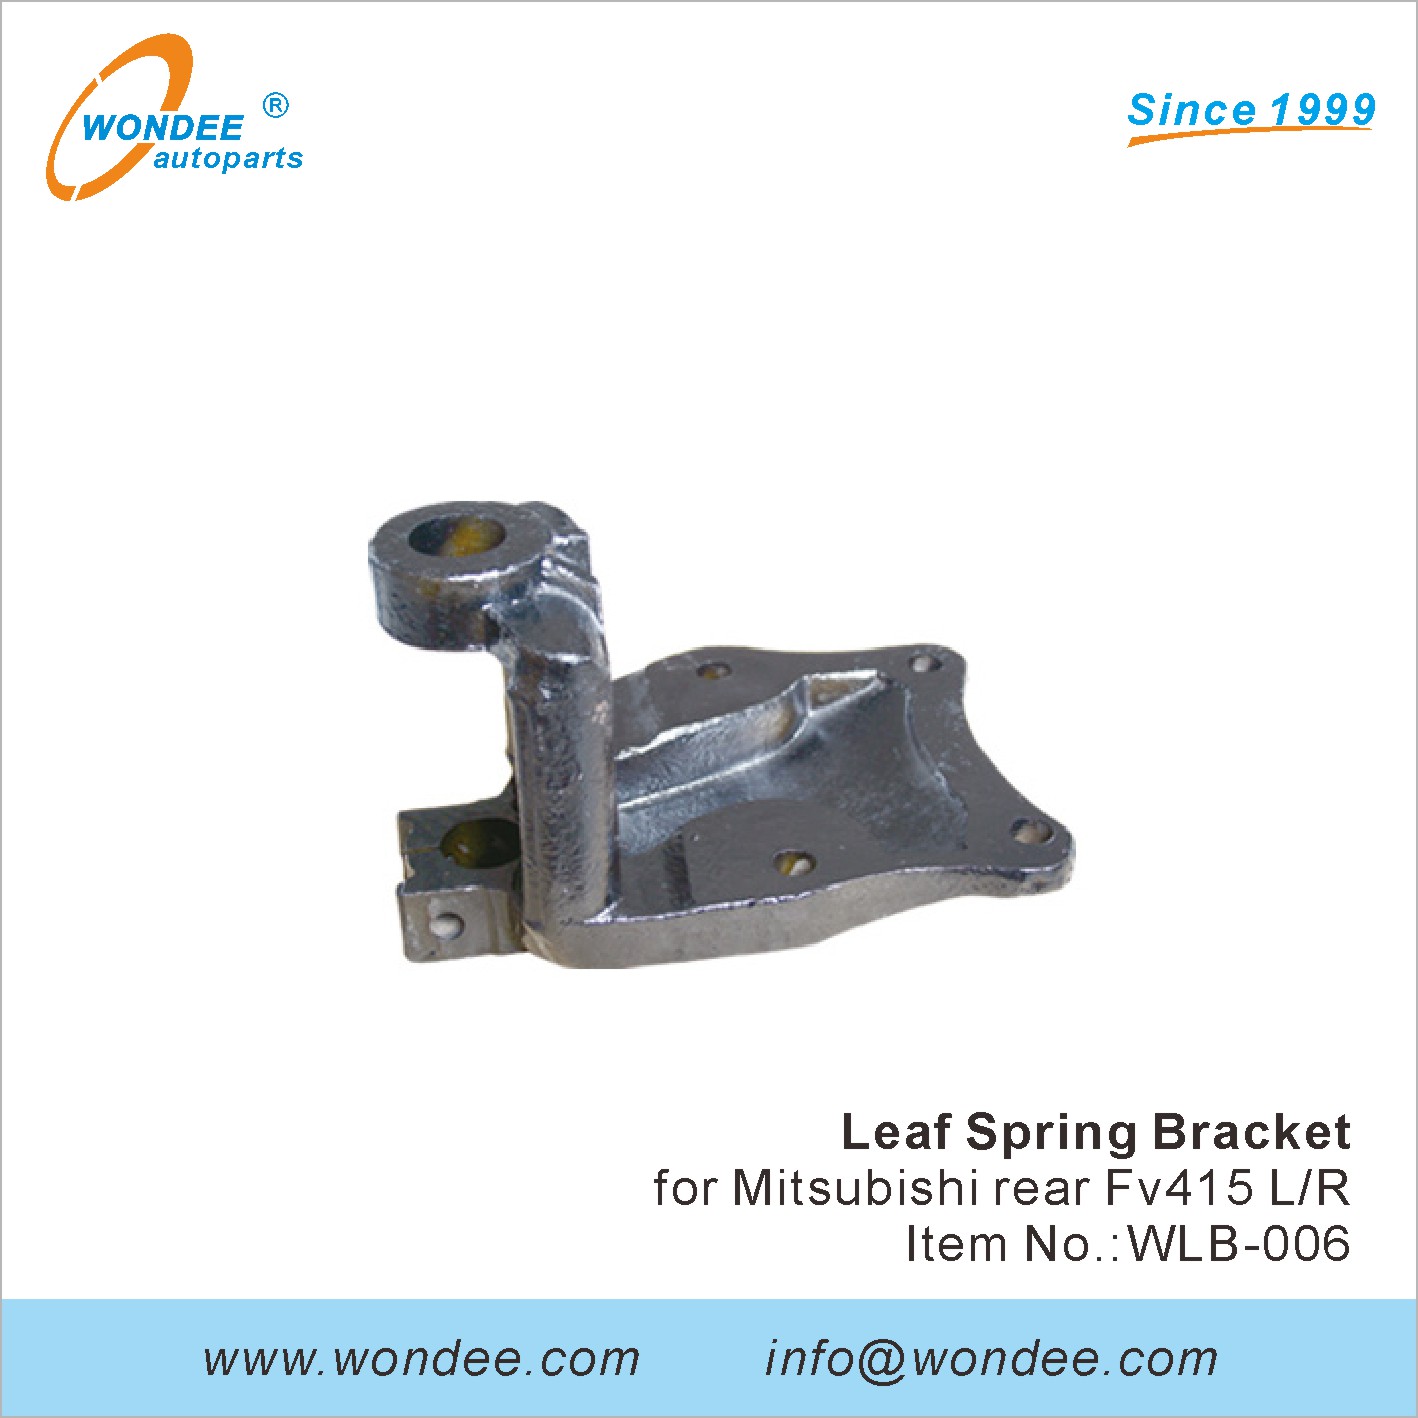 WONDEE leaf spring bracket (6)